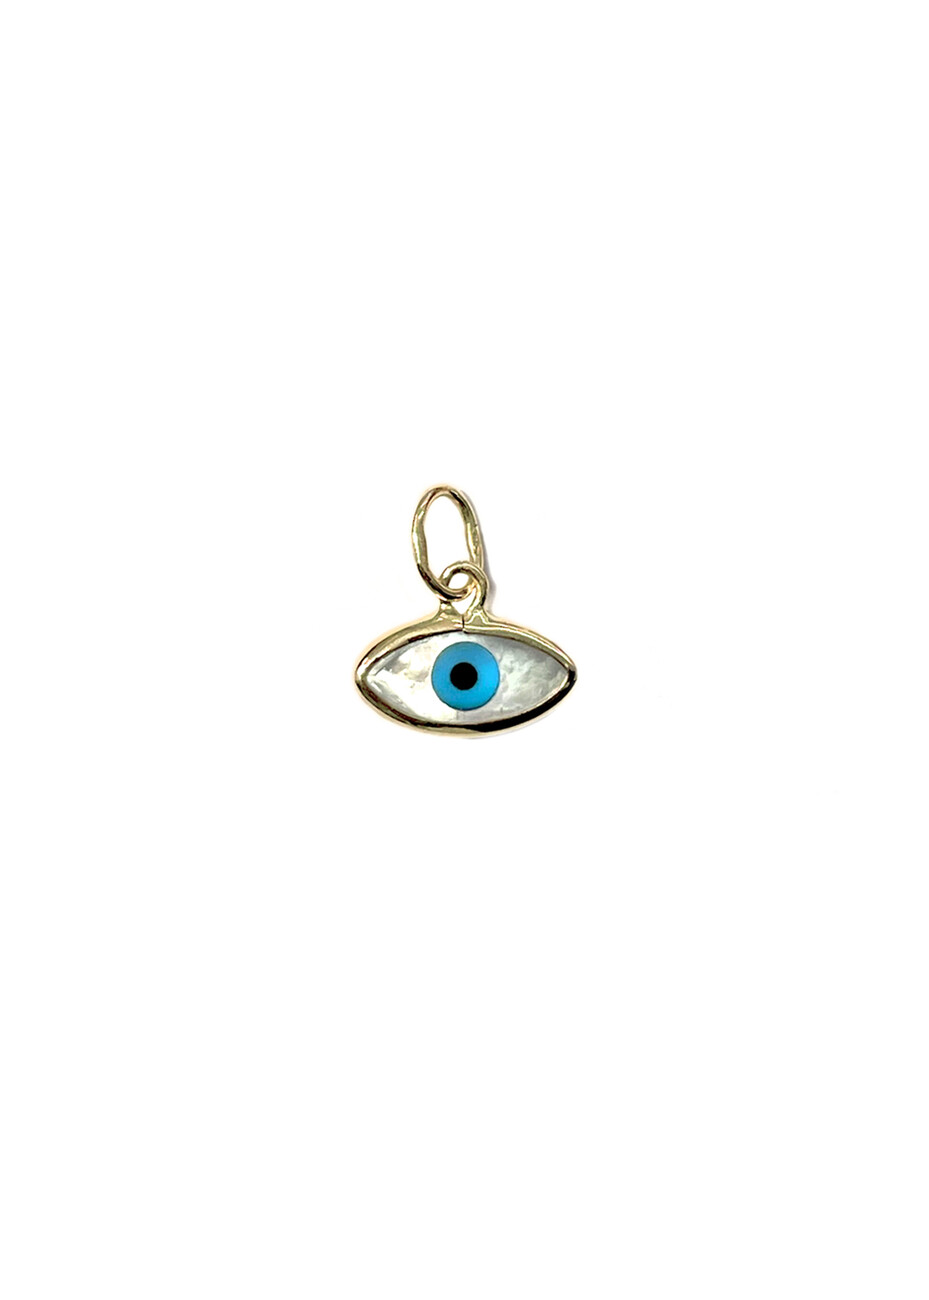 Oval evil eye charm in 18kt gold